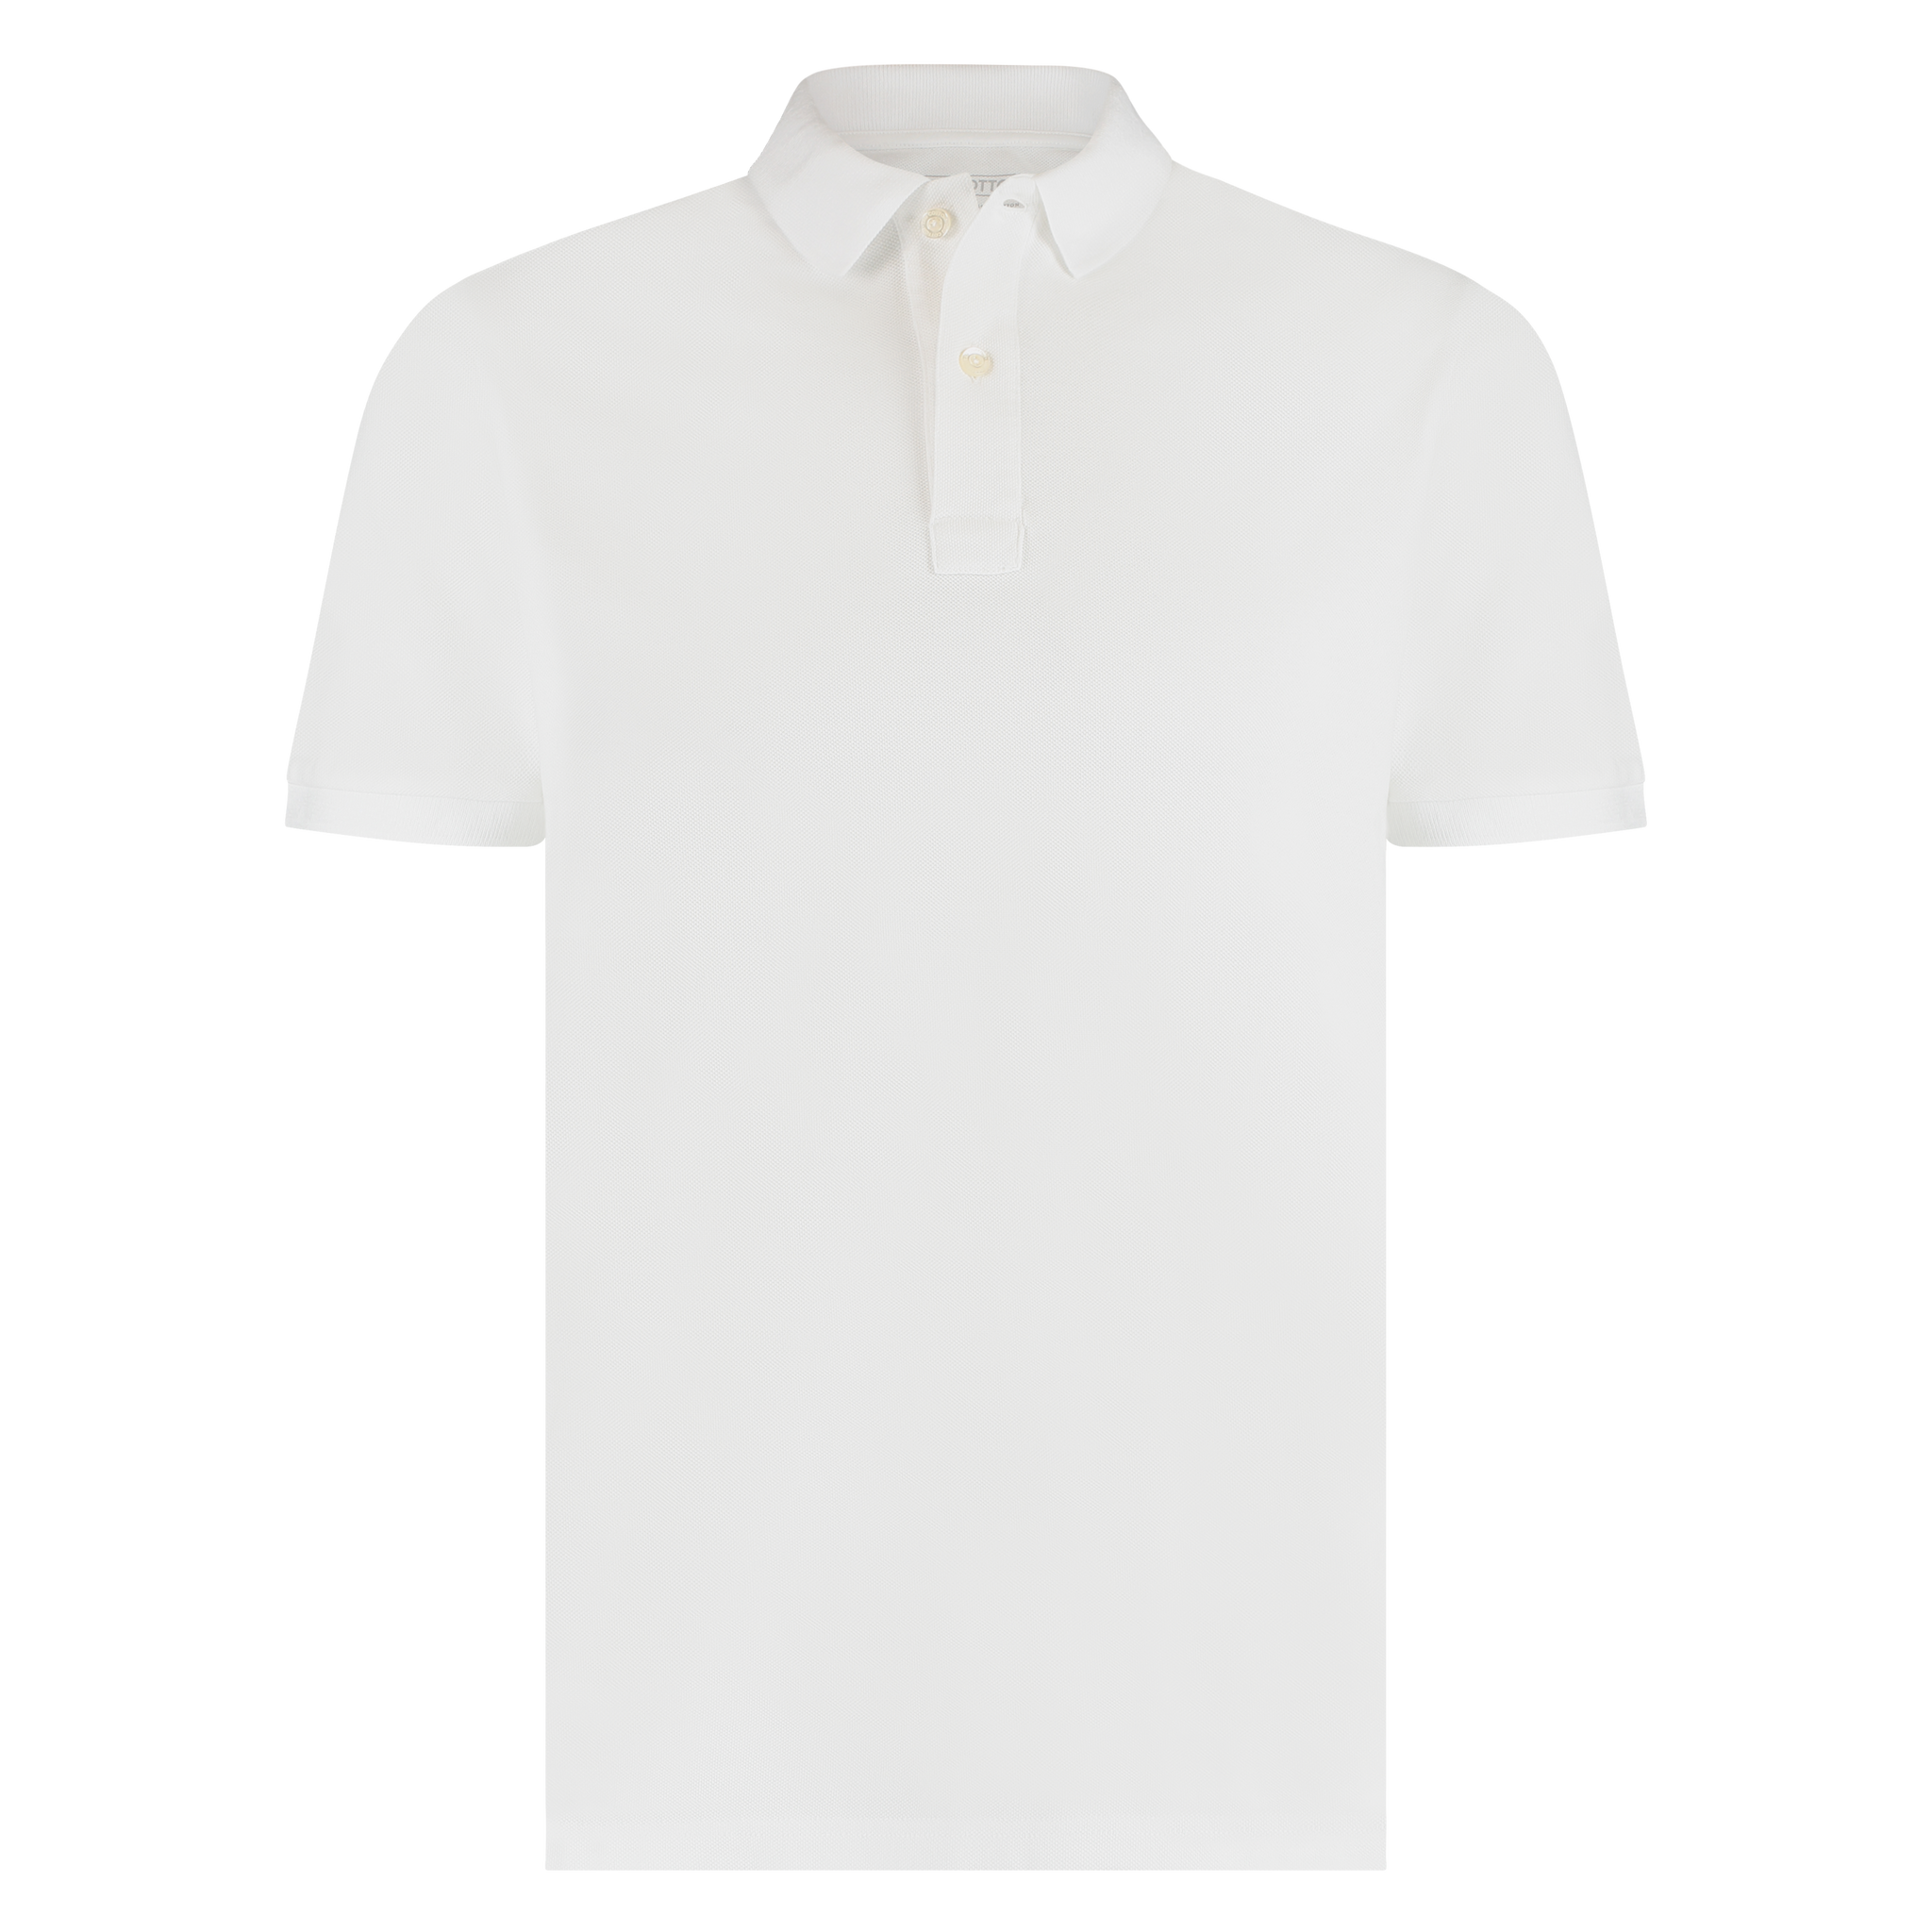 The Pique Polo in White - Organic Cotton Polo by TAU COTTON